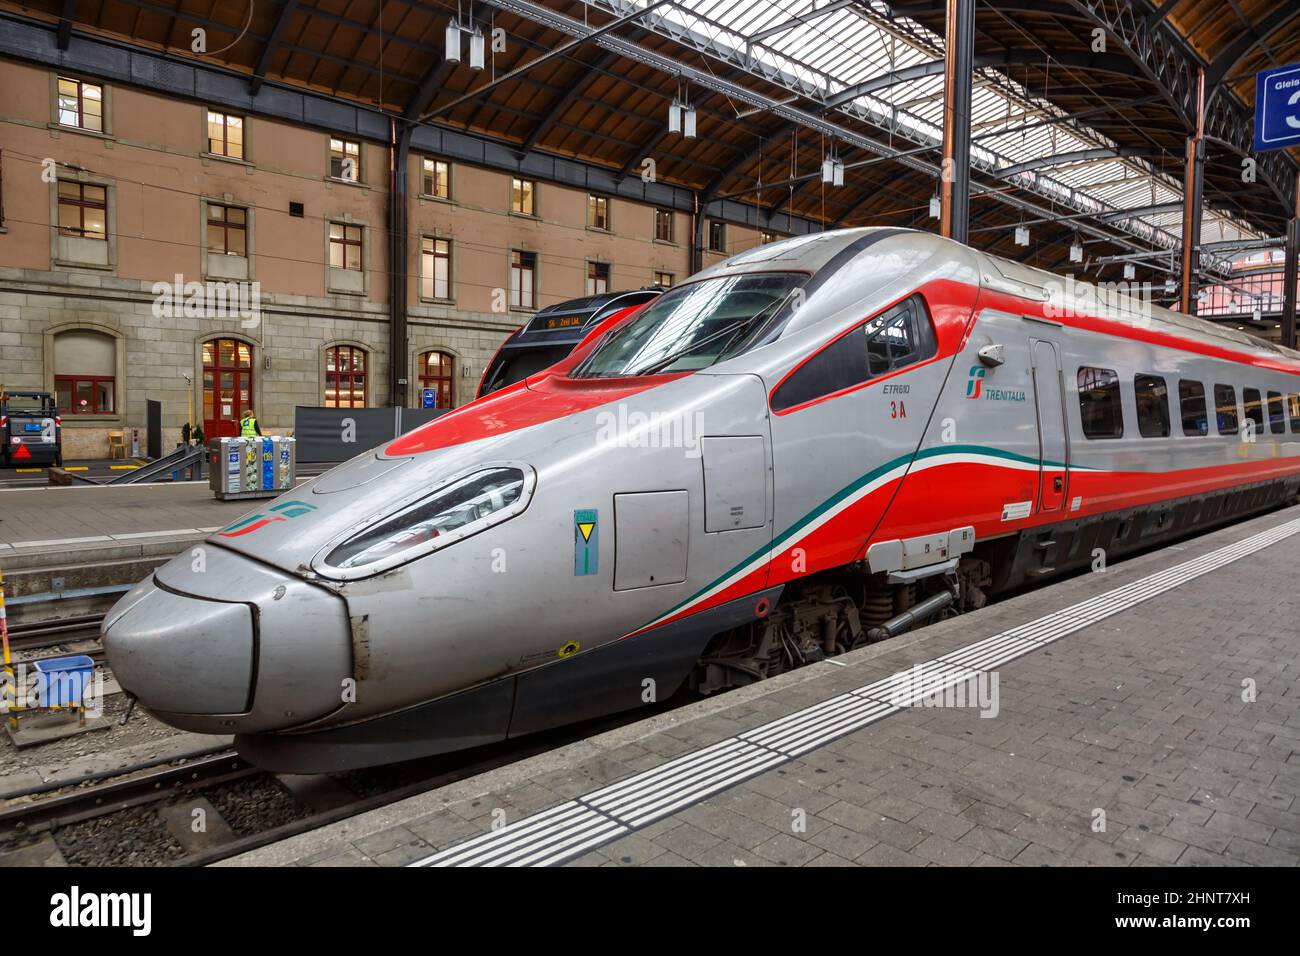 Alstom Trenitalia ETR 610 high-speed train at Basel SBB Railway Station in Switzerland Stock Photo